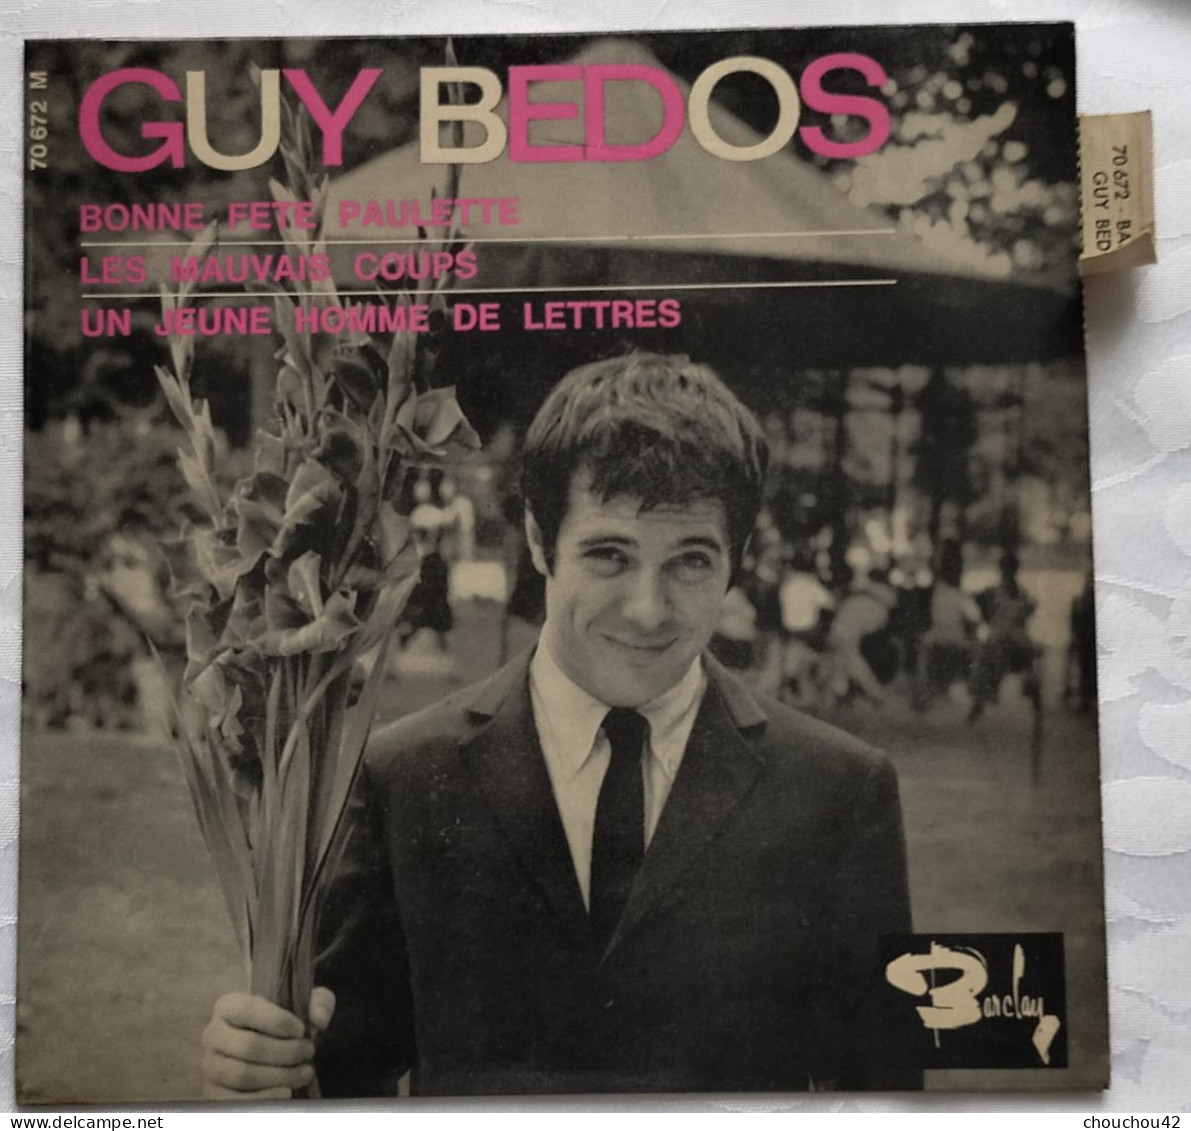 Guy Bedos - Humor, Cabaret